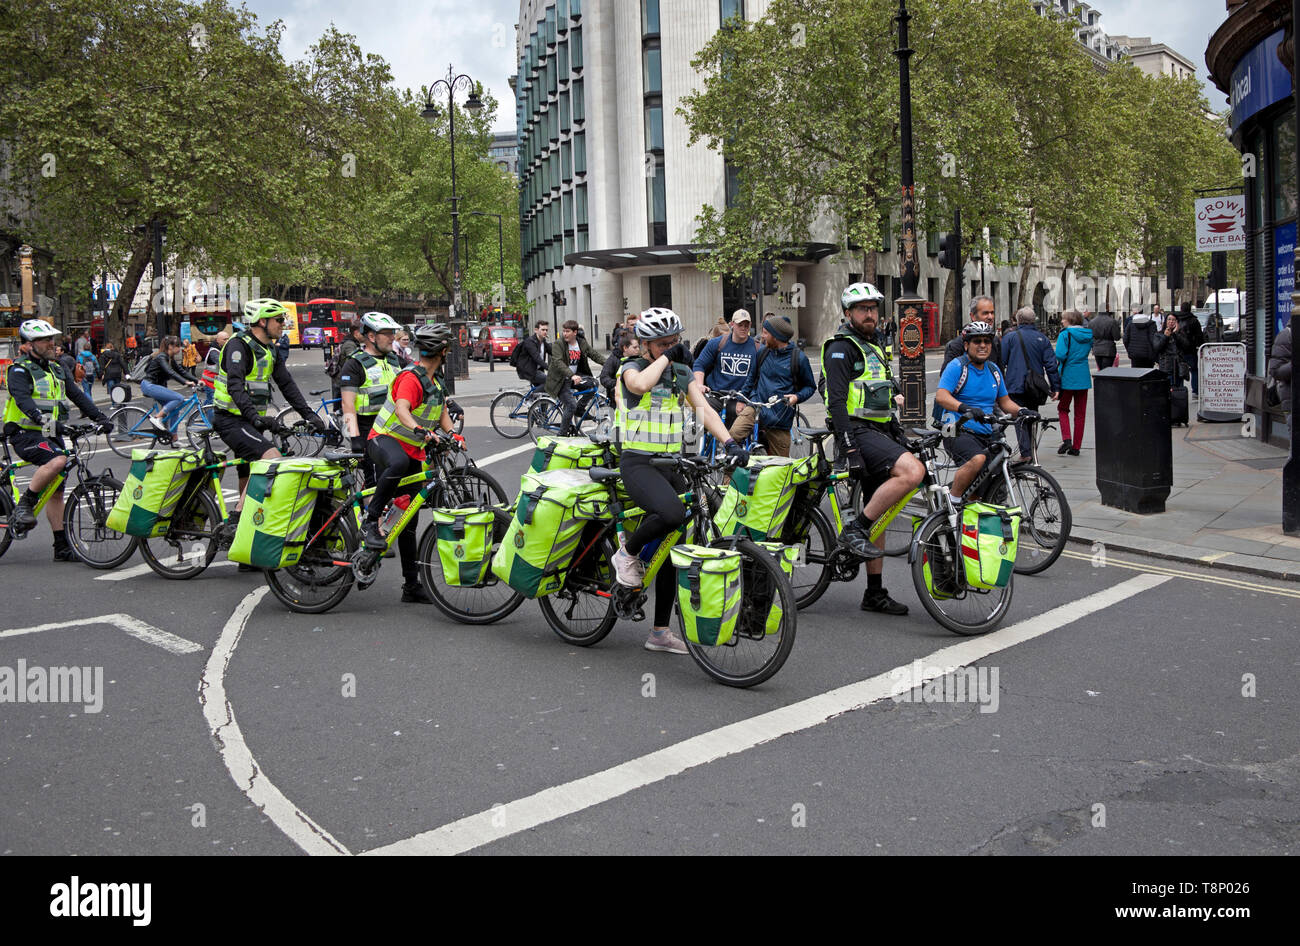 London Ambulance Service, cyclistes, Londres, Angleterre, Royaume-Uni, Europe Banque D'Images